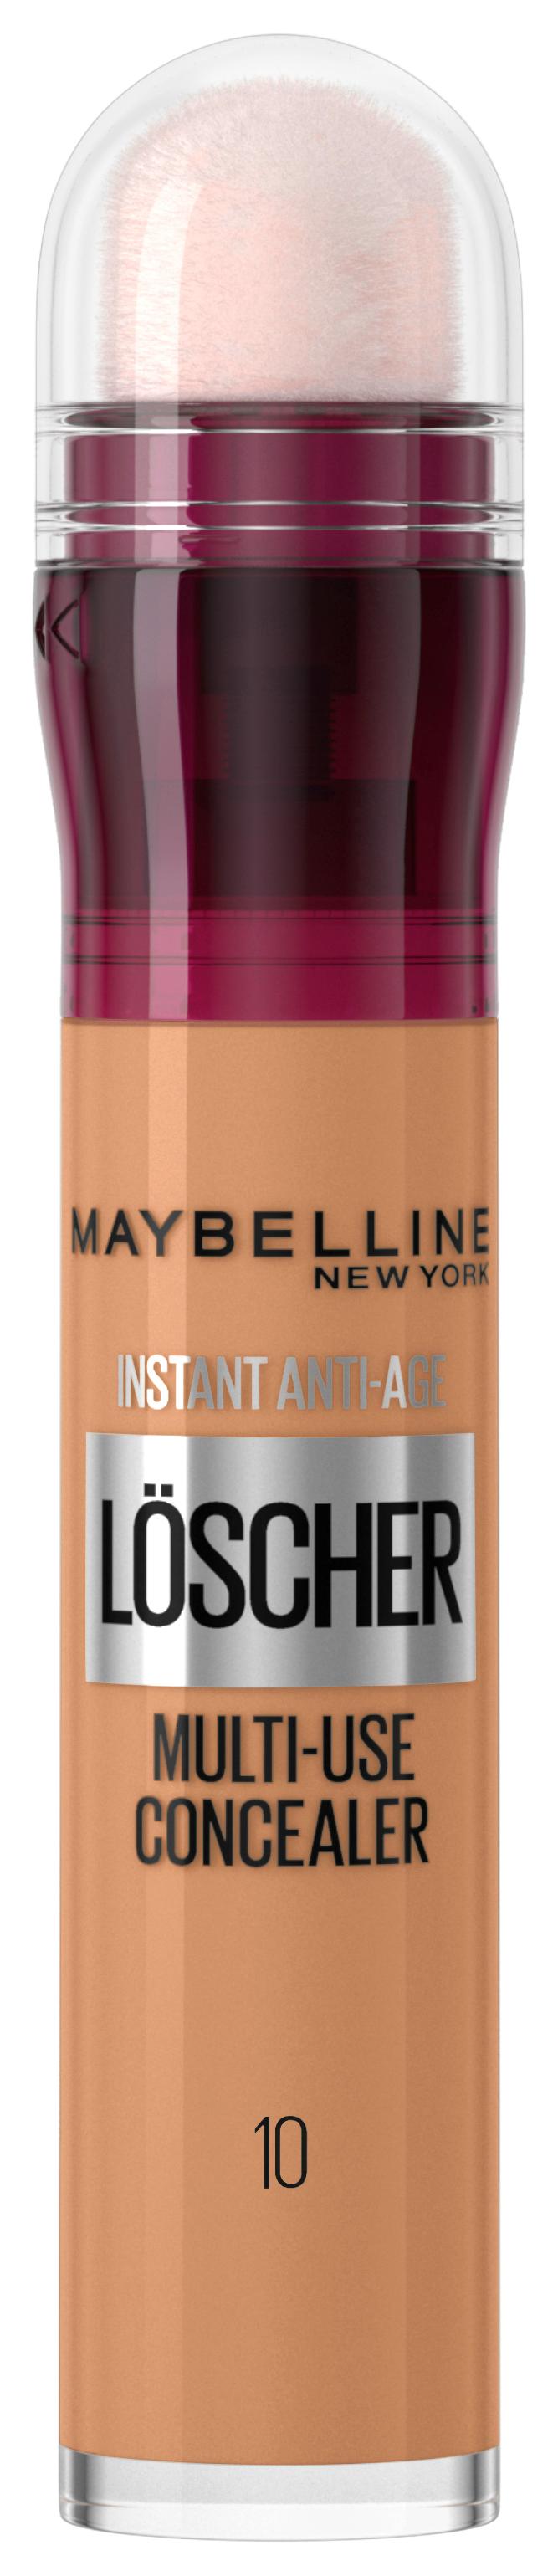 Maybelline NY Teint - Instant Anti-Age Effekt Löscher Concealer Nr. 10 Caramel